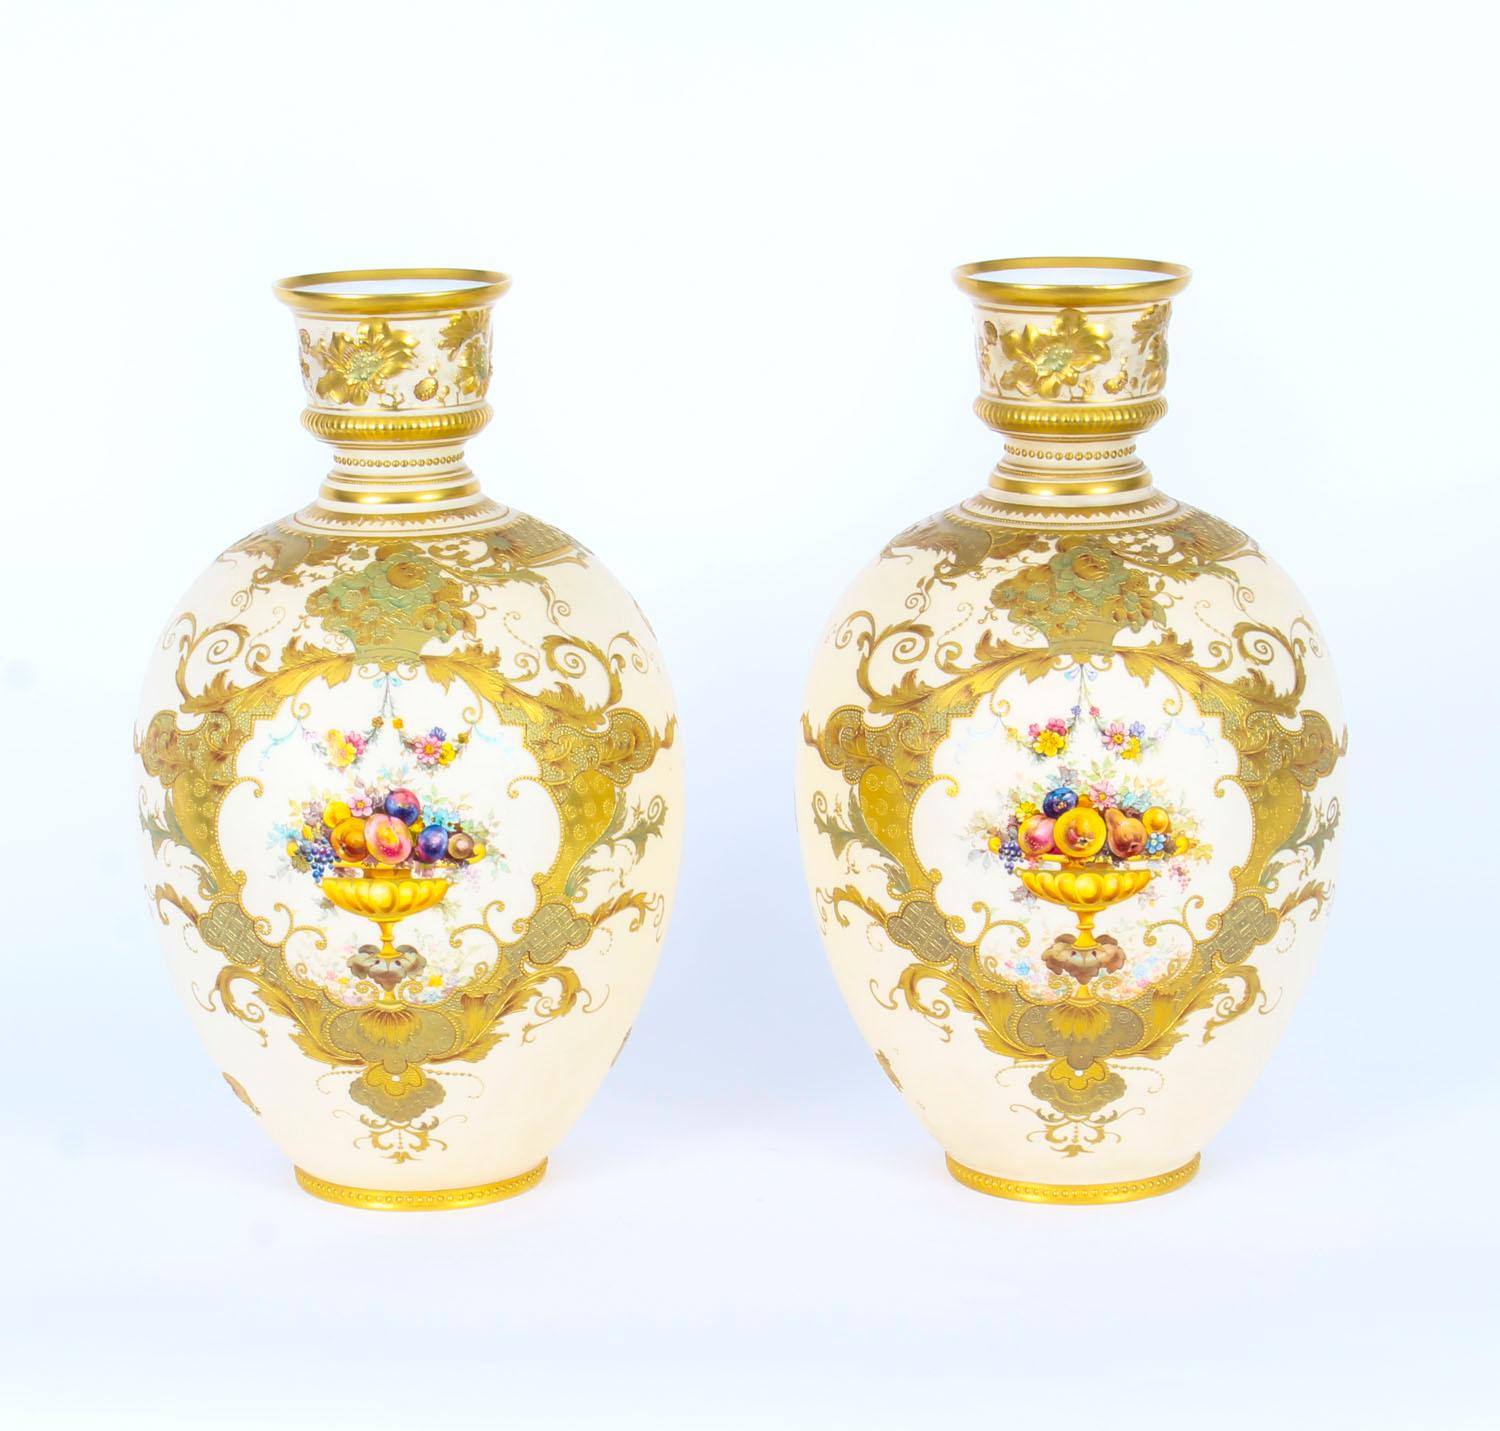 Antique Pair of Royal Crown Derby Blushed Porcelain Vases, 19th Century 13